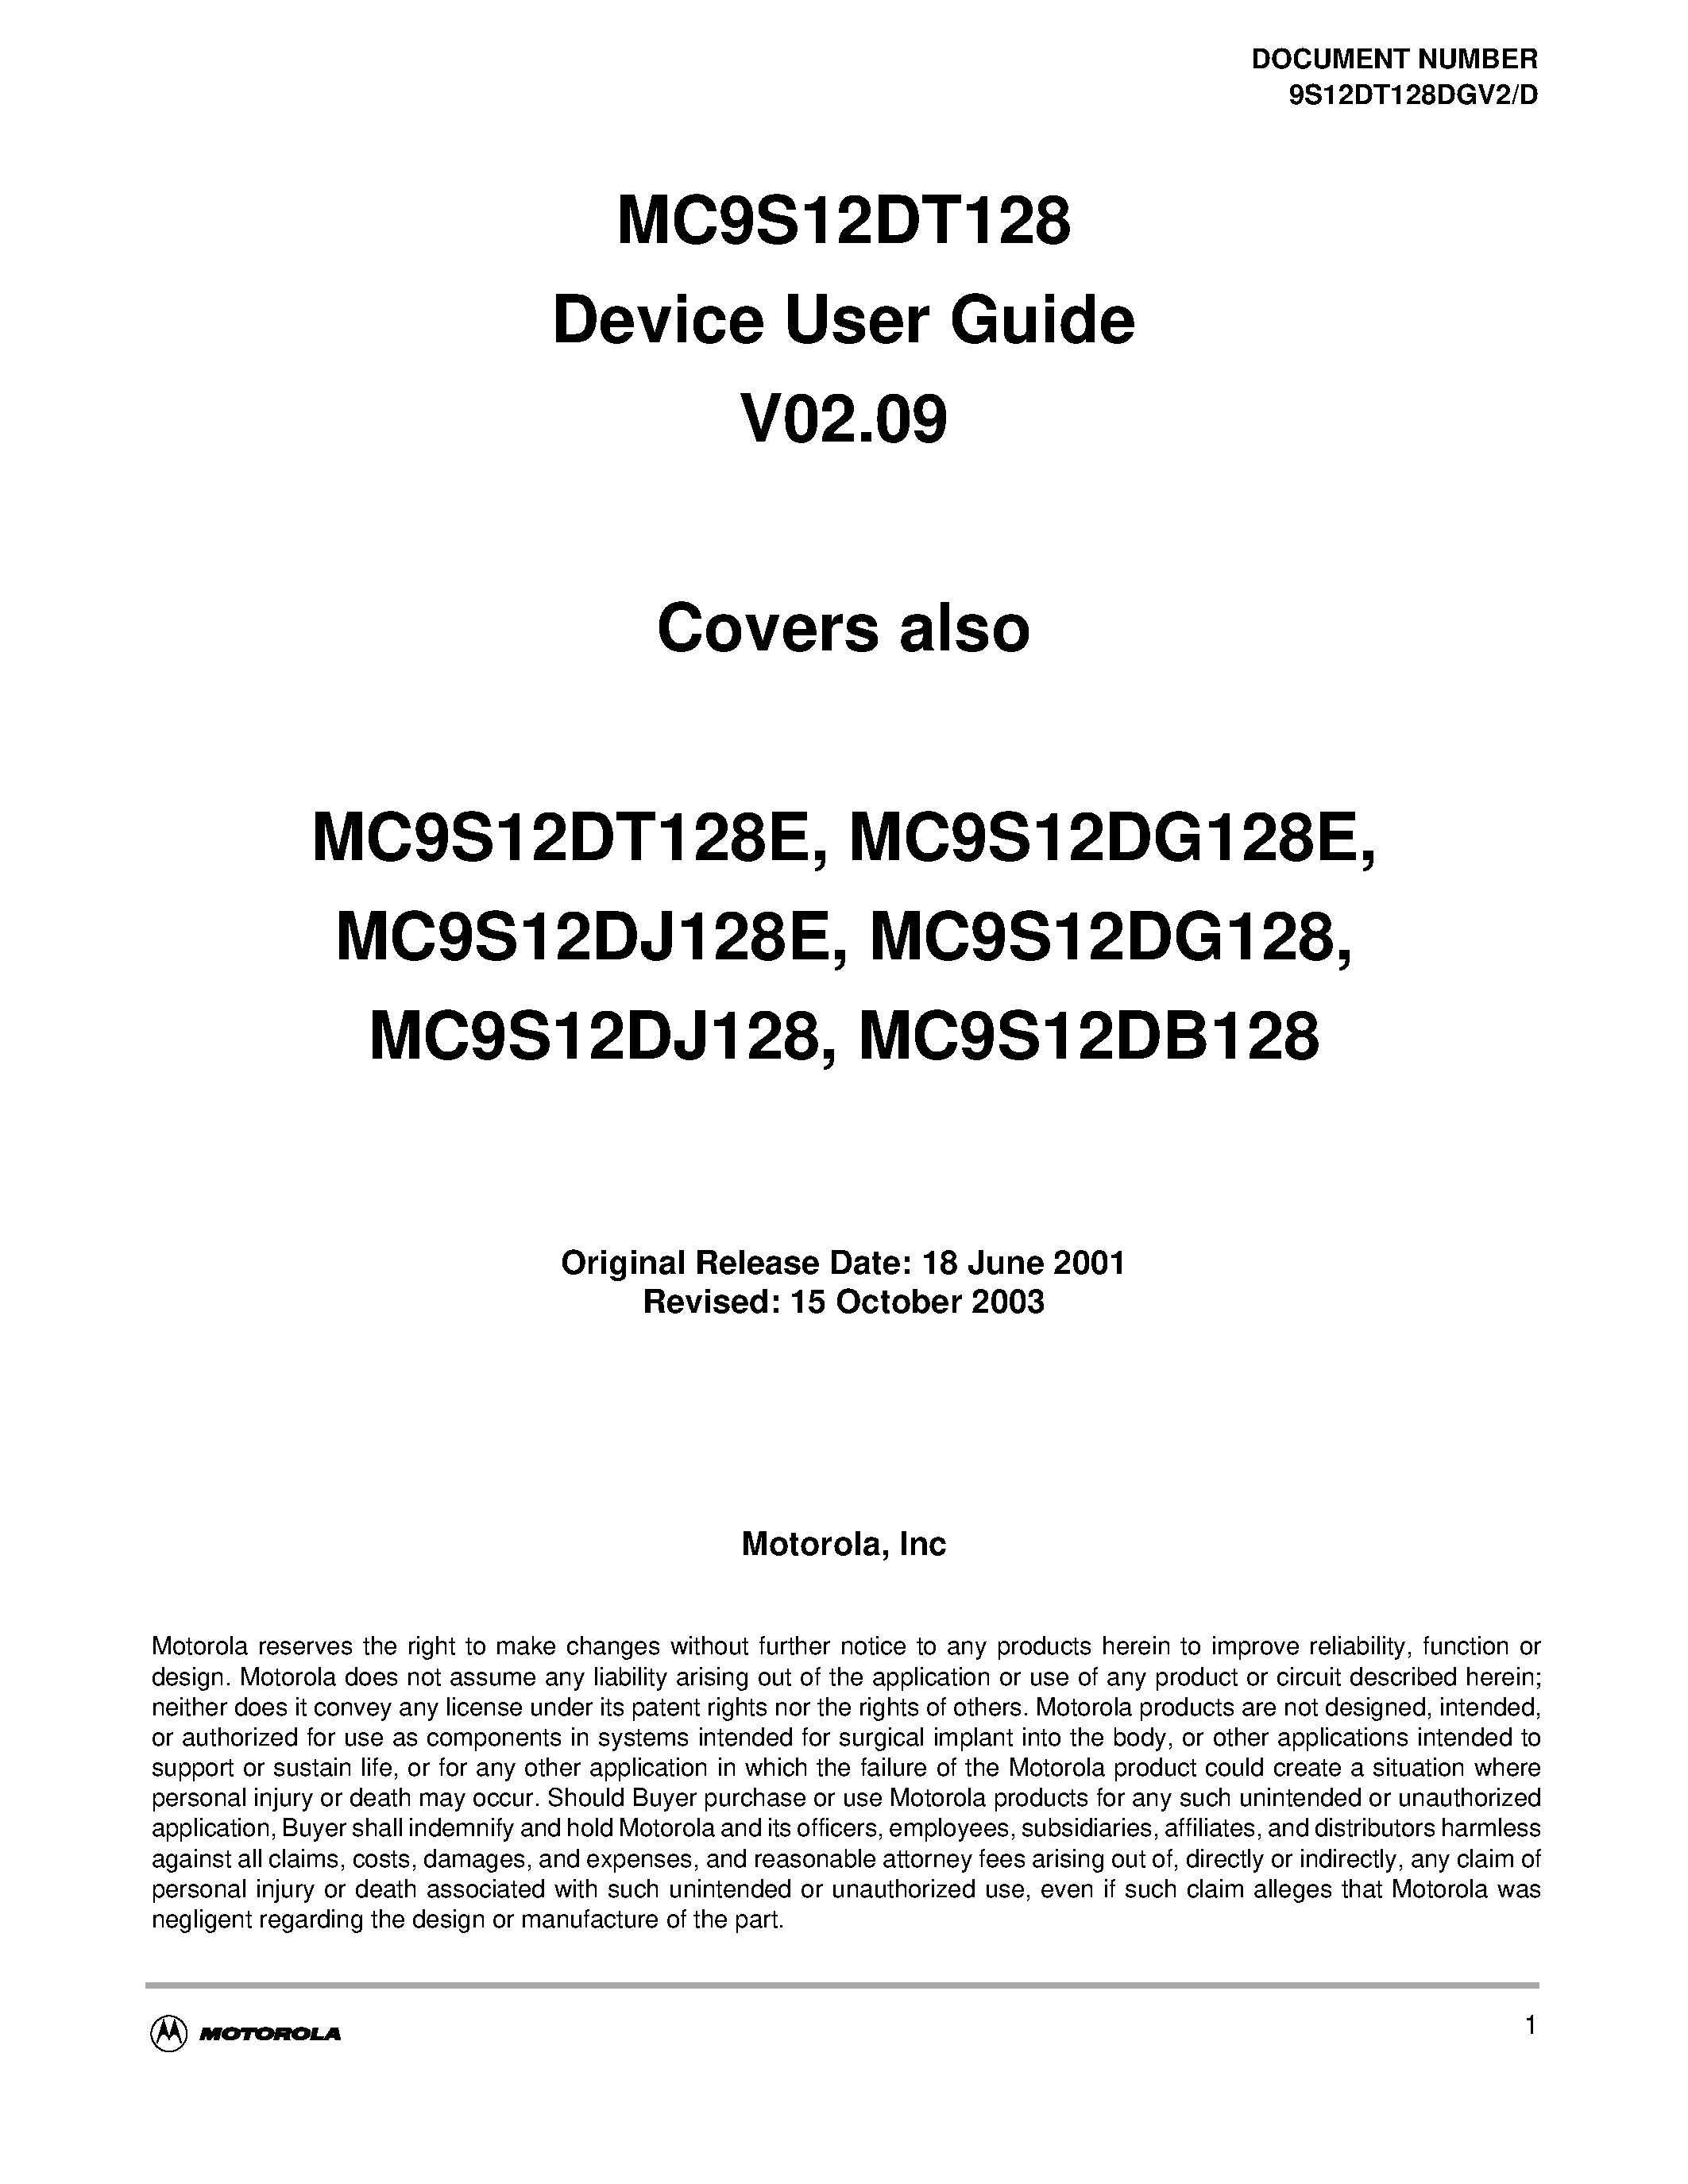 Datasheet S12PWM8B8CV1D - MC9S12DT128 Device User Guide V02.09 page 1